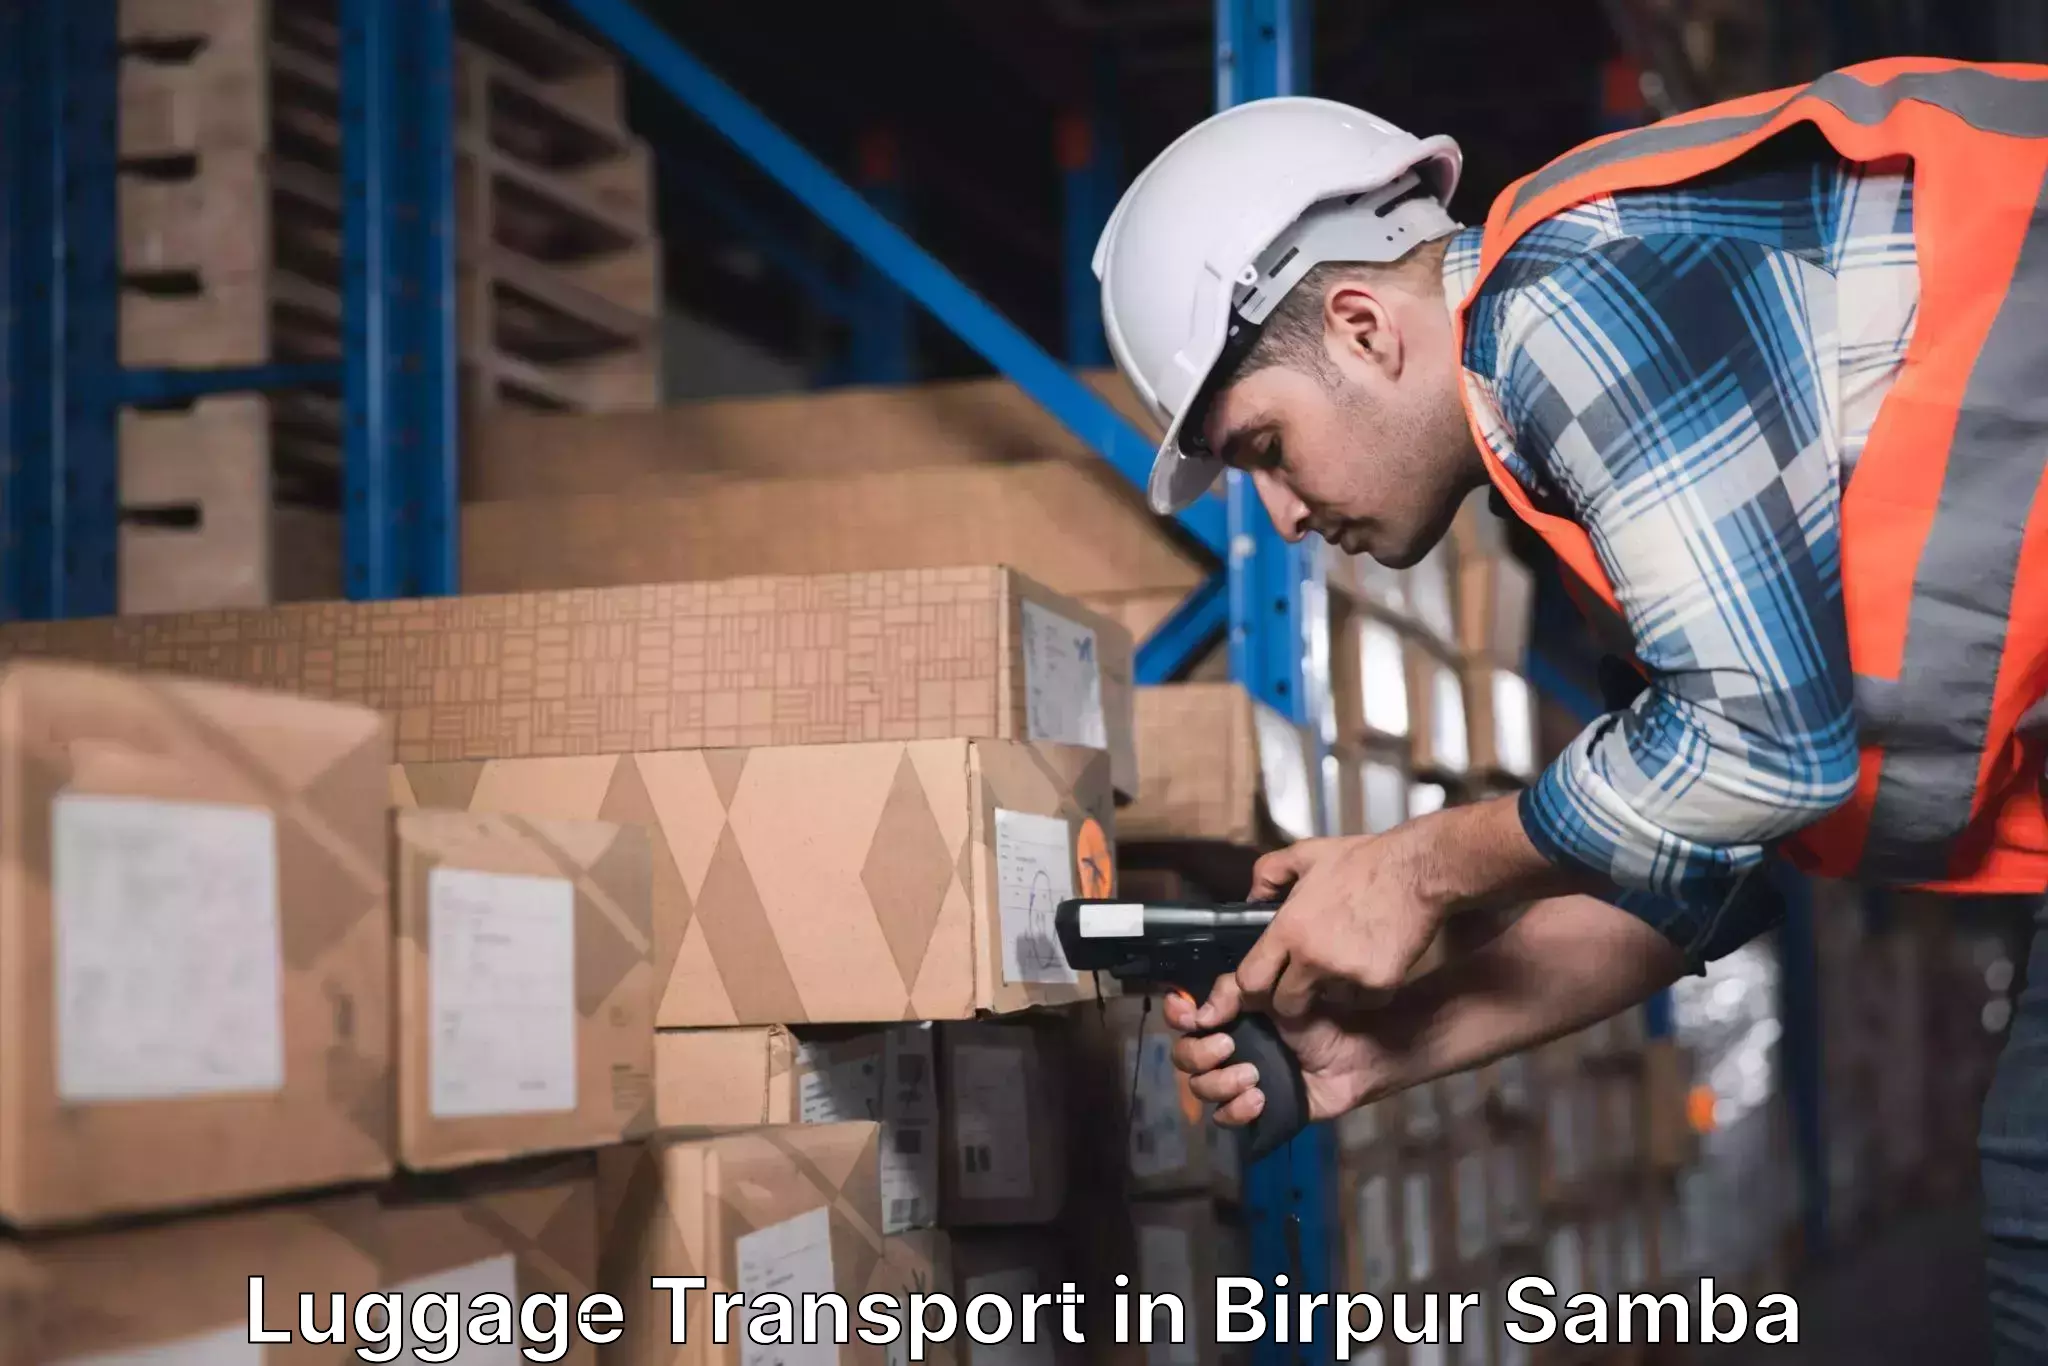 Luggage shipment processing in Birpur Samba